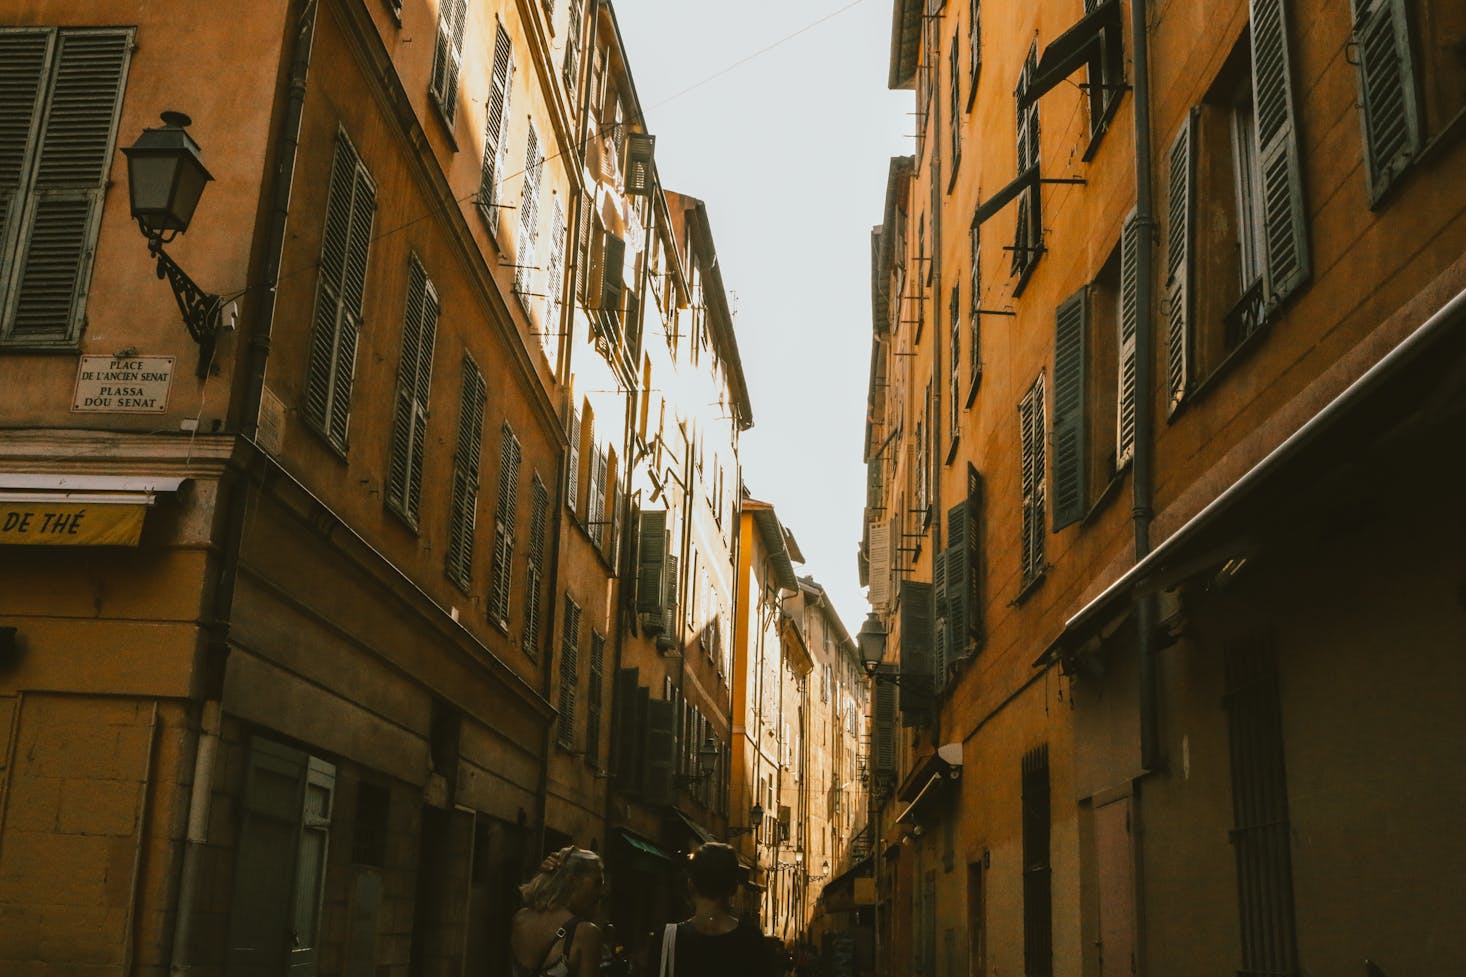 Old Street in Nice, France